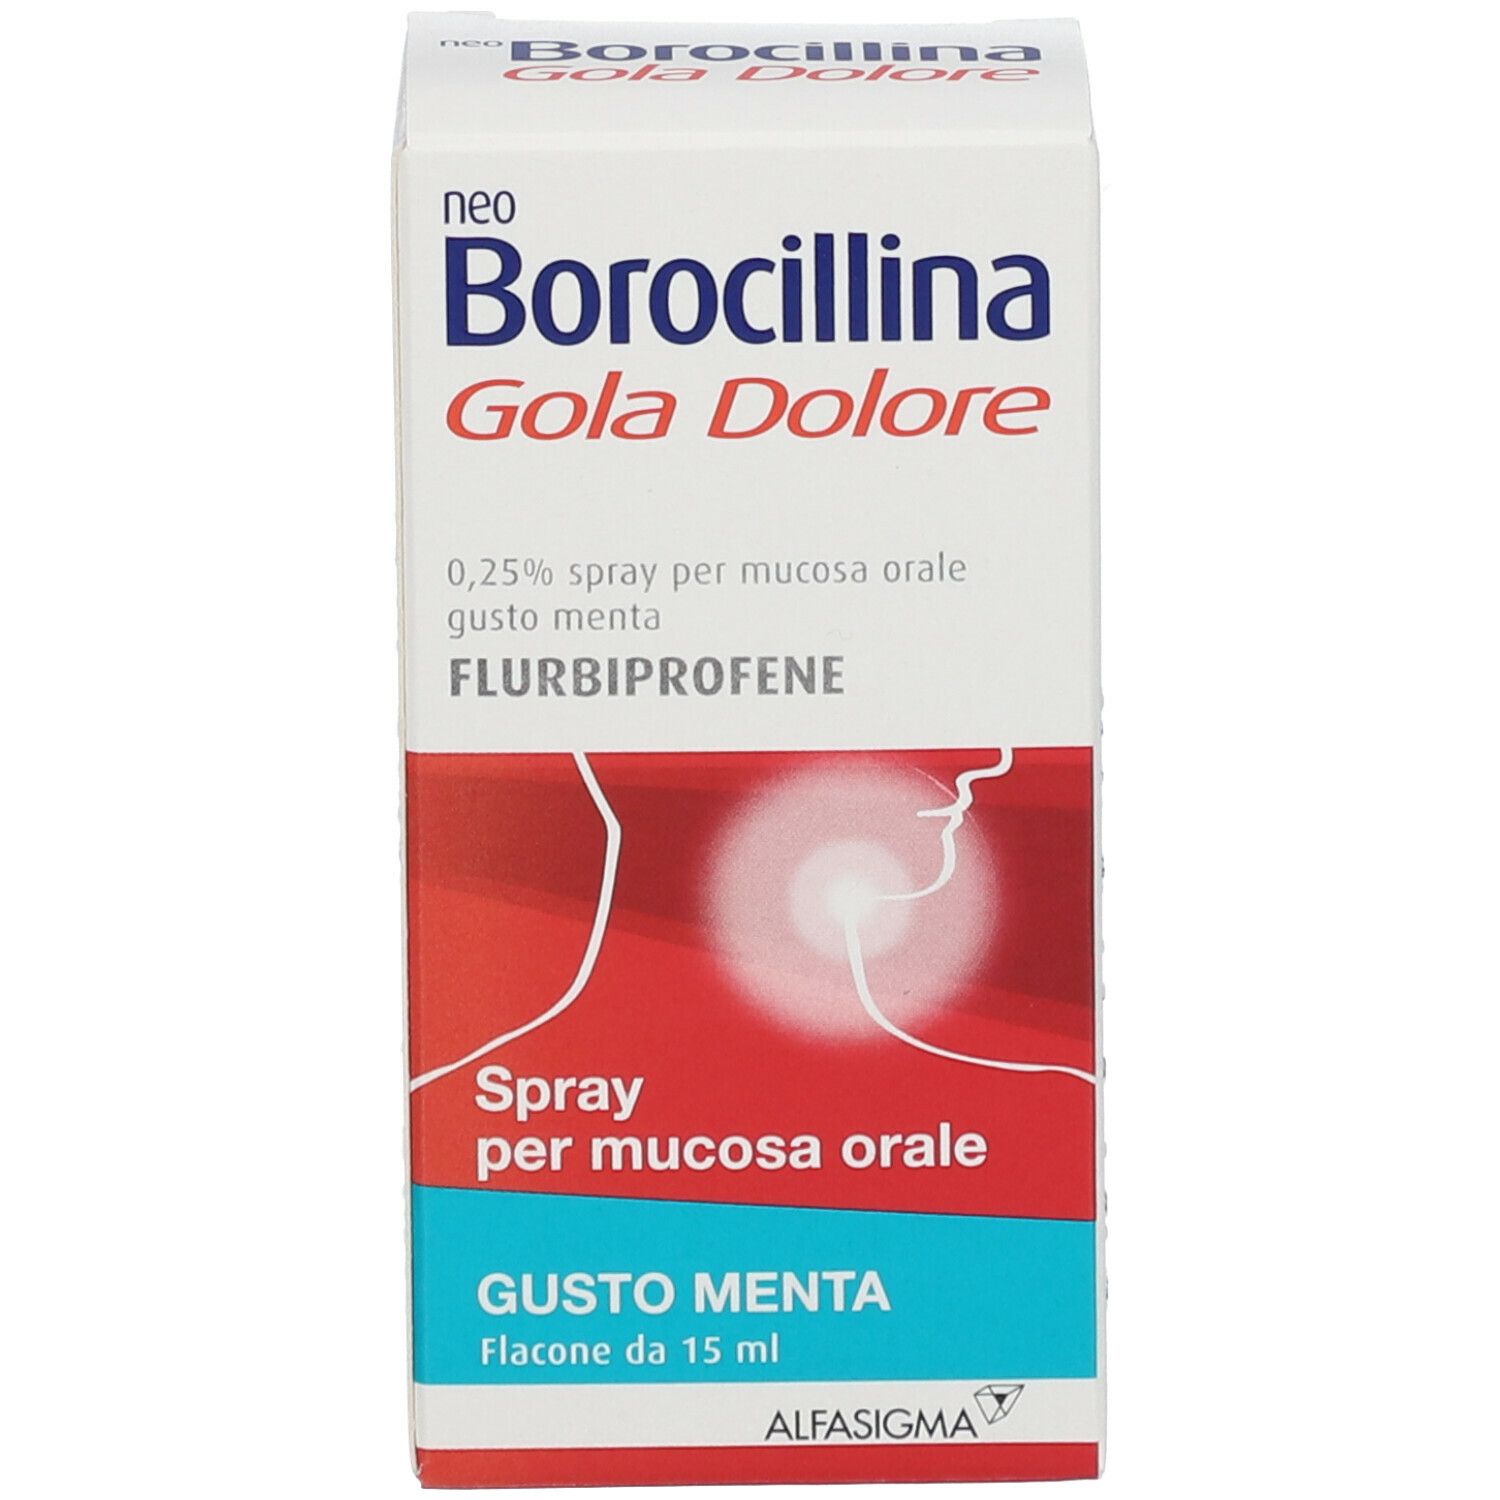 NeoBorocillina Gola Dolore Flurbiprofene Spray Gusto menta